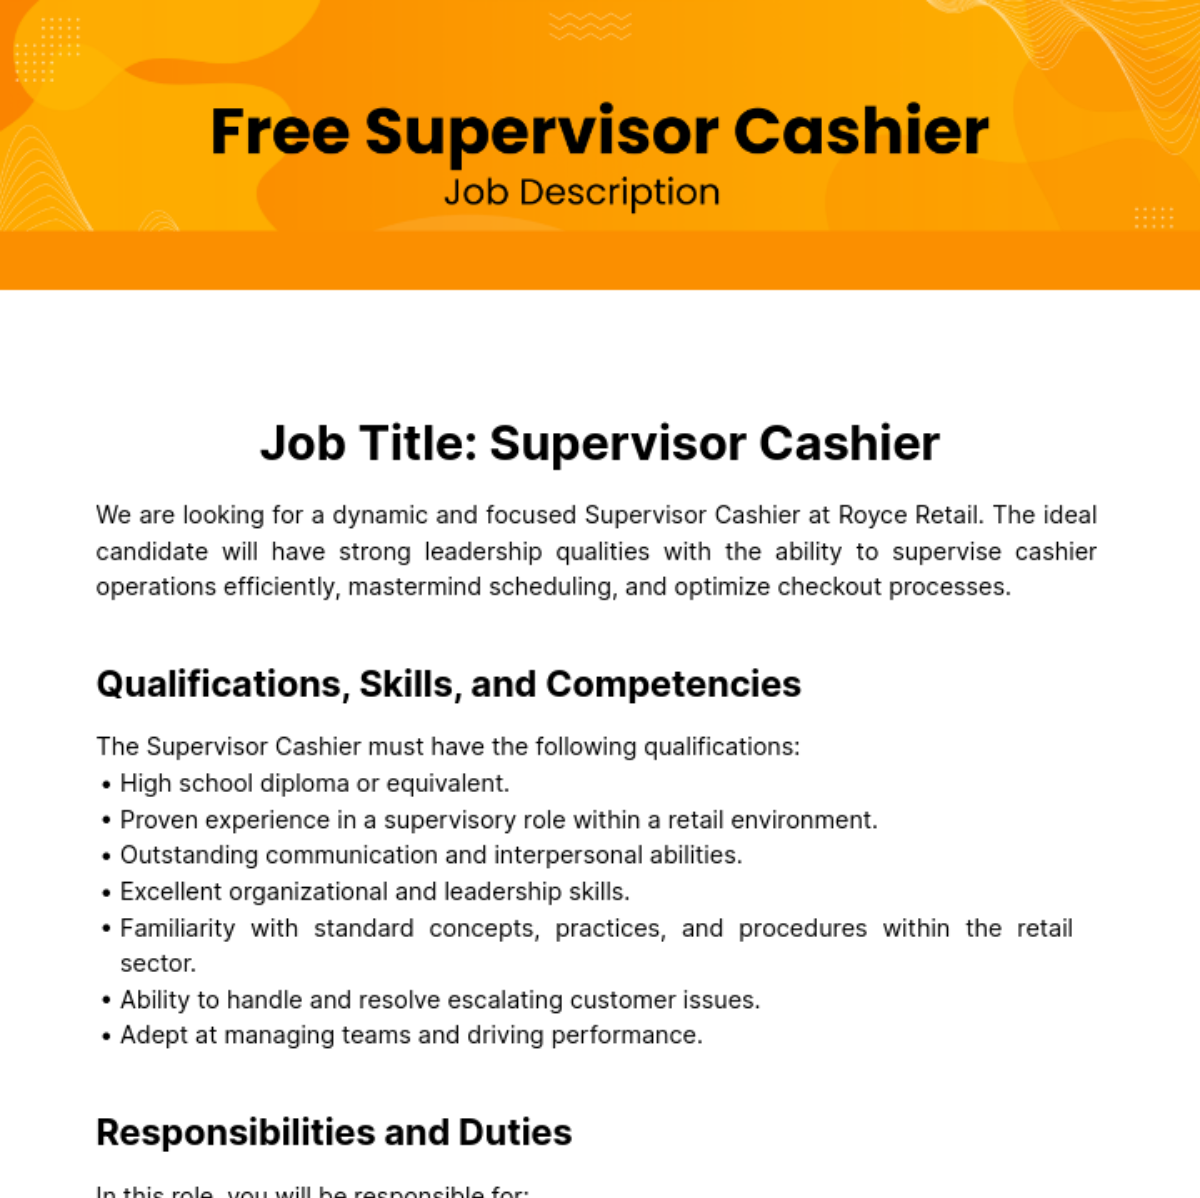 Free Supervisor Cashier Job Description Template